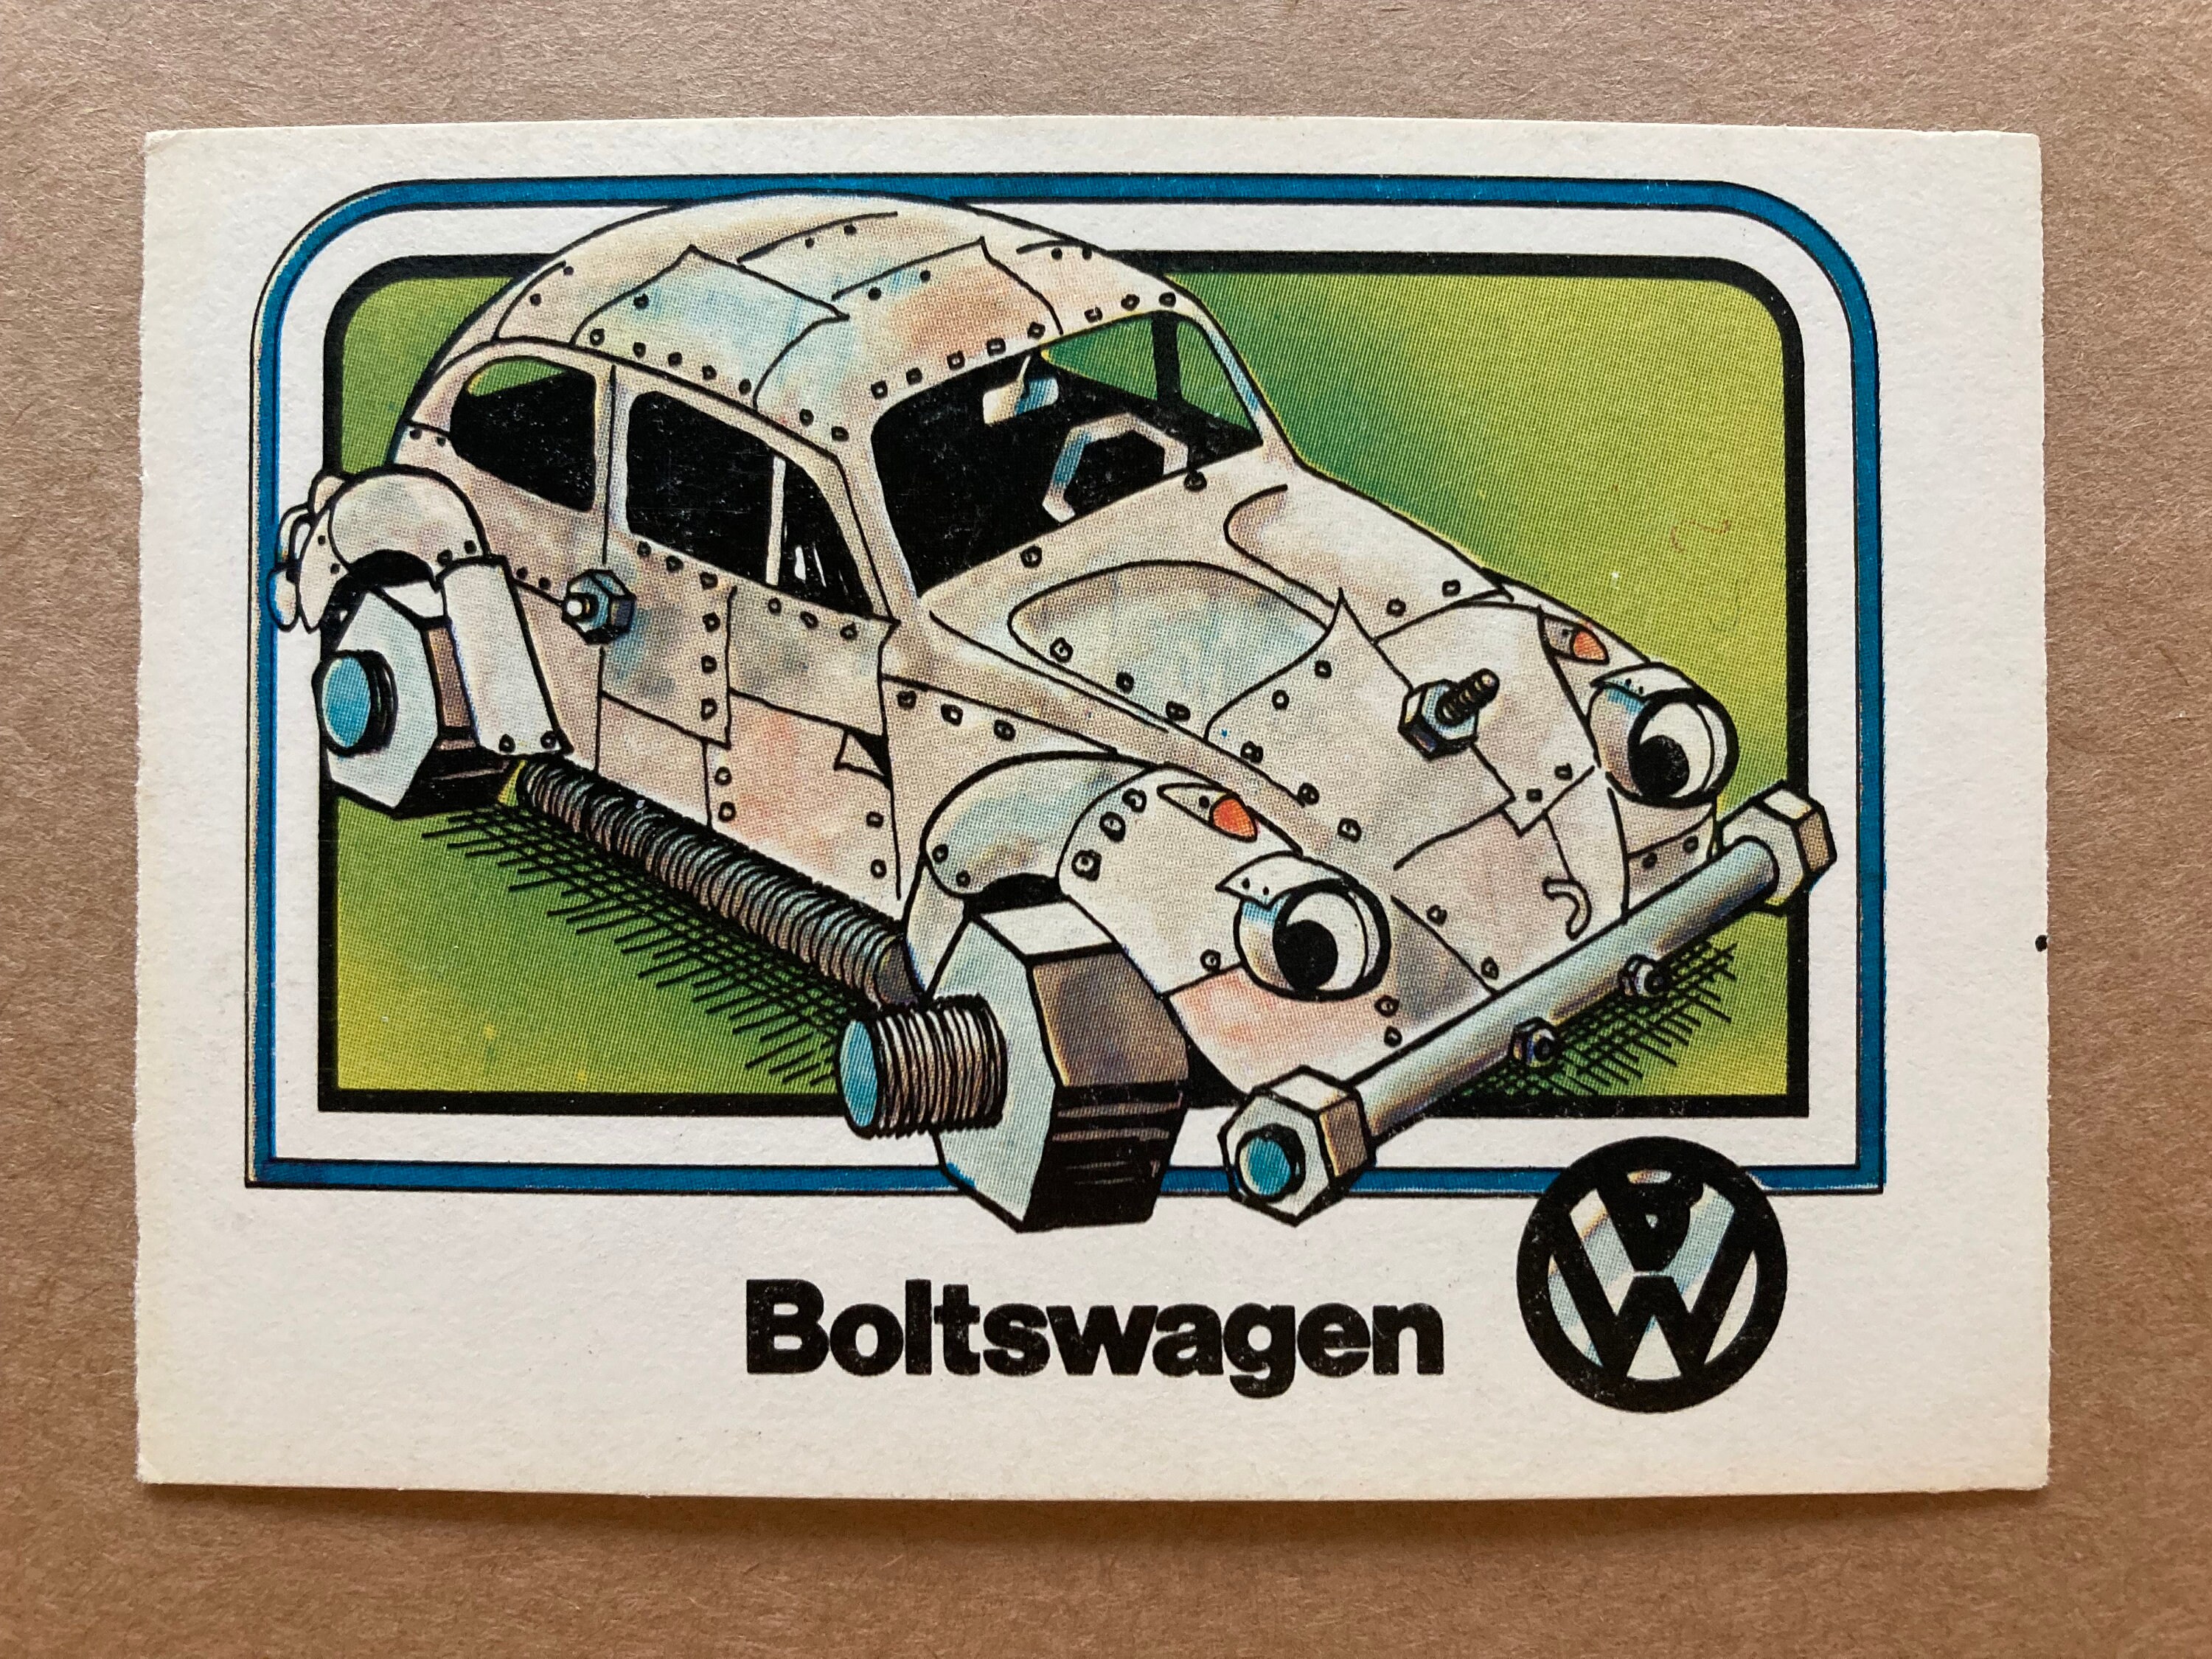 1976 Wonderbread Crazy Cars Toybota Toyota Trading Card